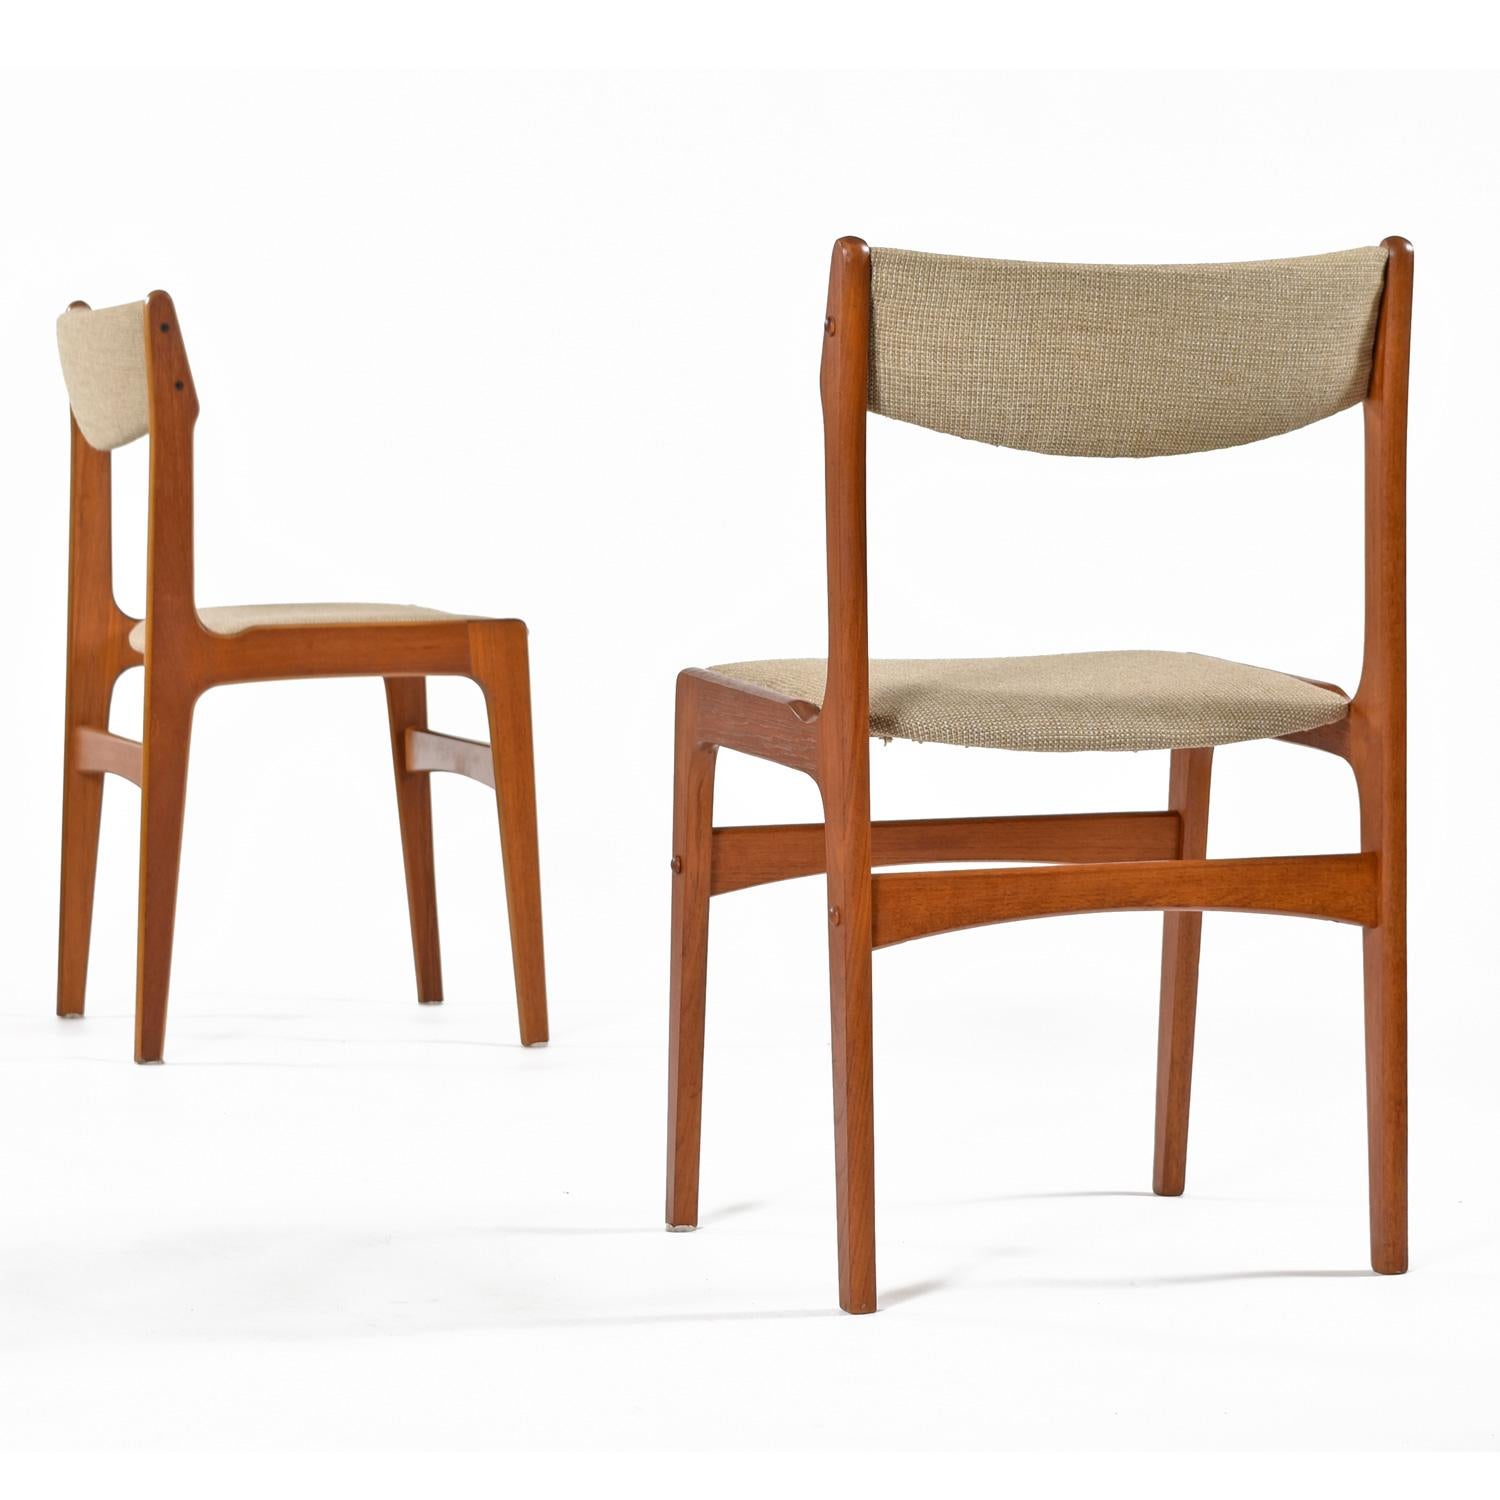 Late 20th Century Scandinavian Modern Tweed Fabric Solid Teak Danish Dining Chairs Set of 8